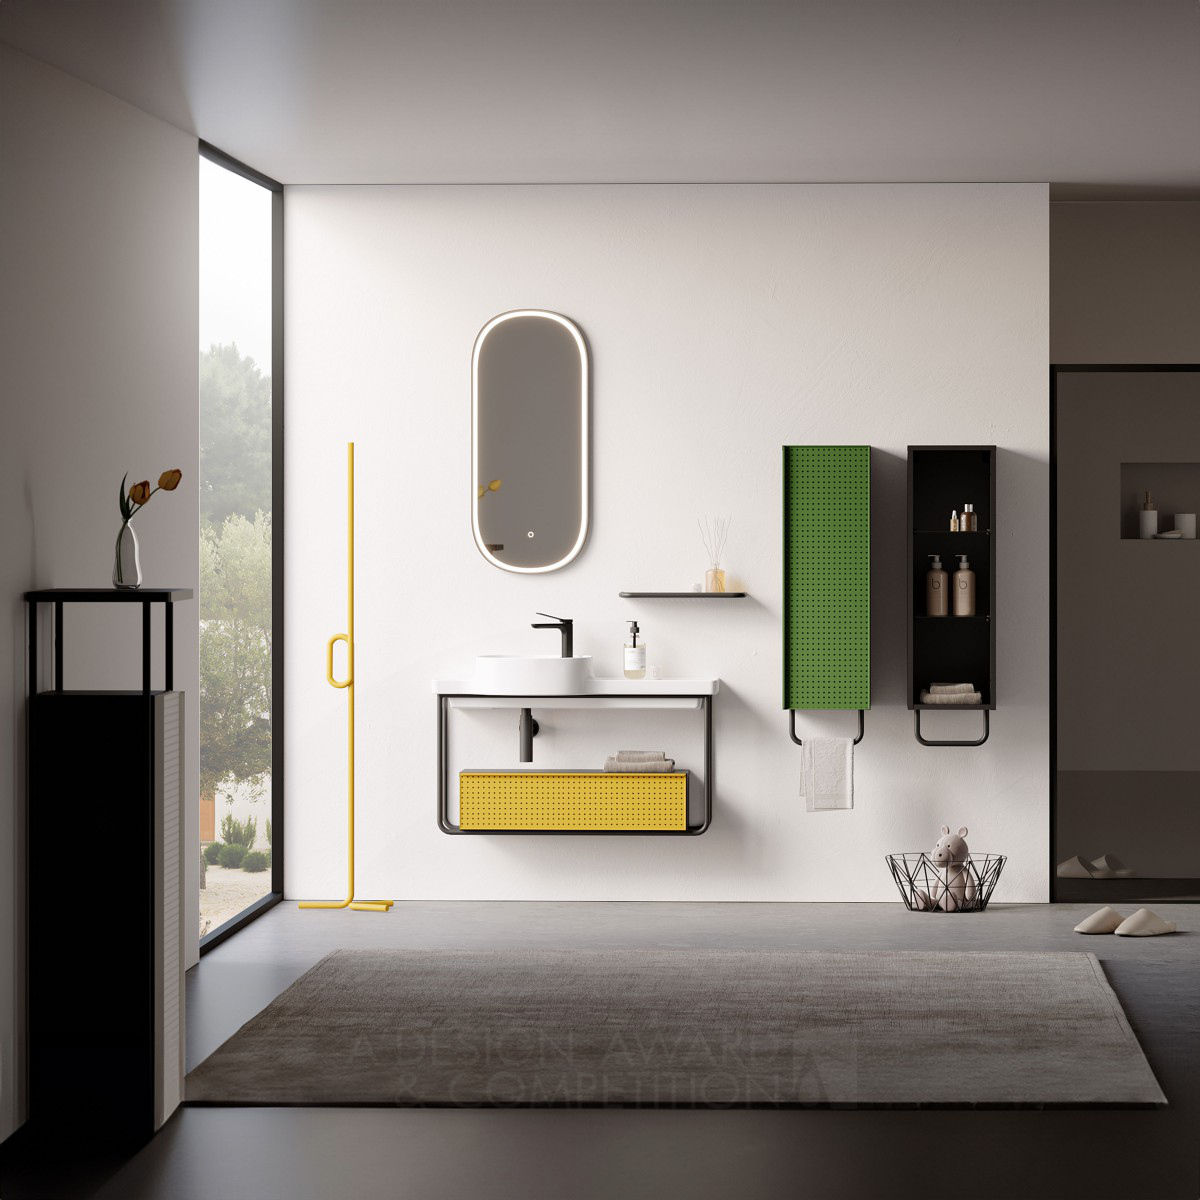 Orka Design Team wins Bronze at the prestigious A' Bathroom Furniture and Sanitary Ware Design Award with Noto Bathroom Furniture.